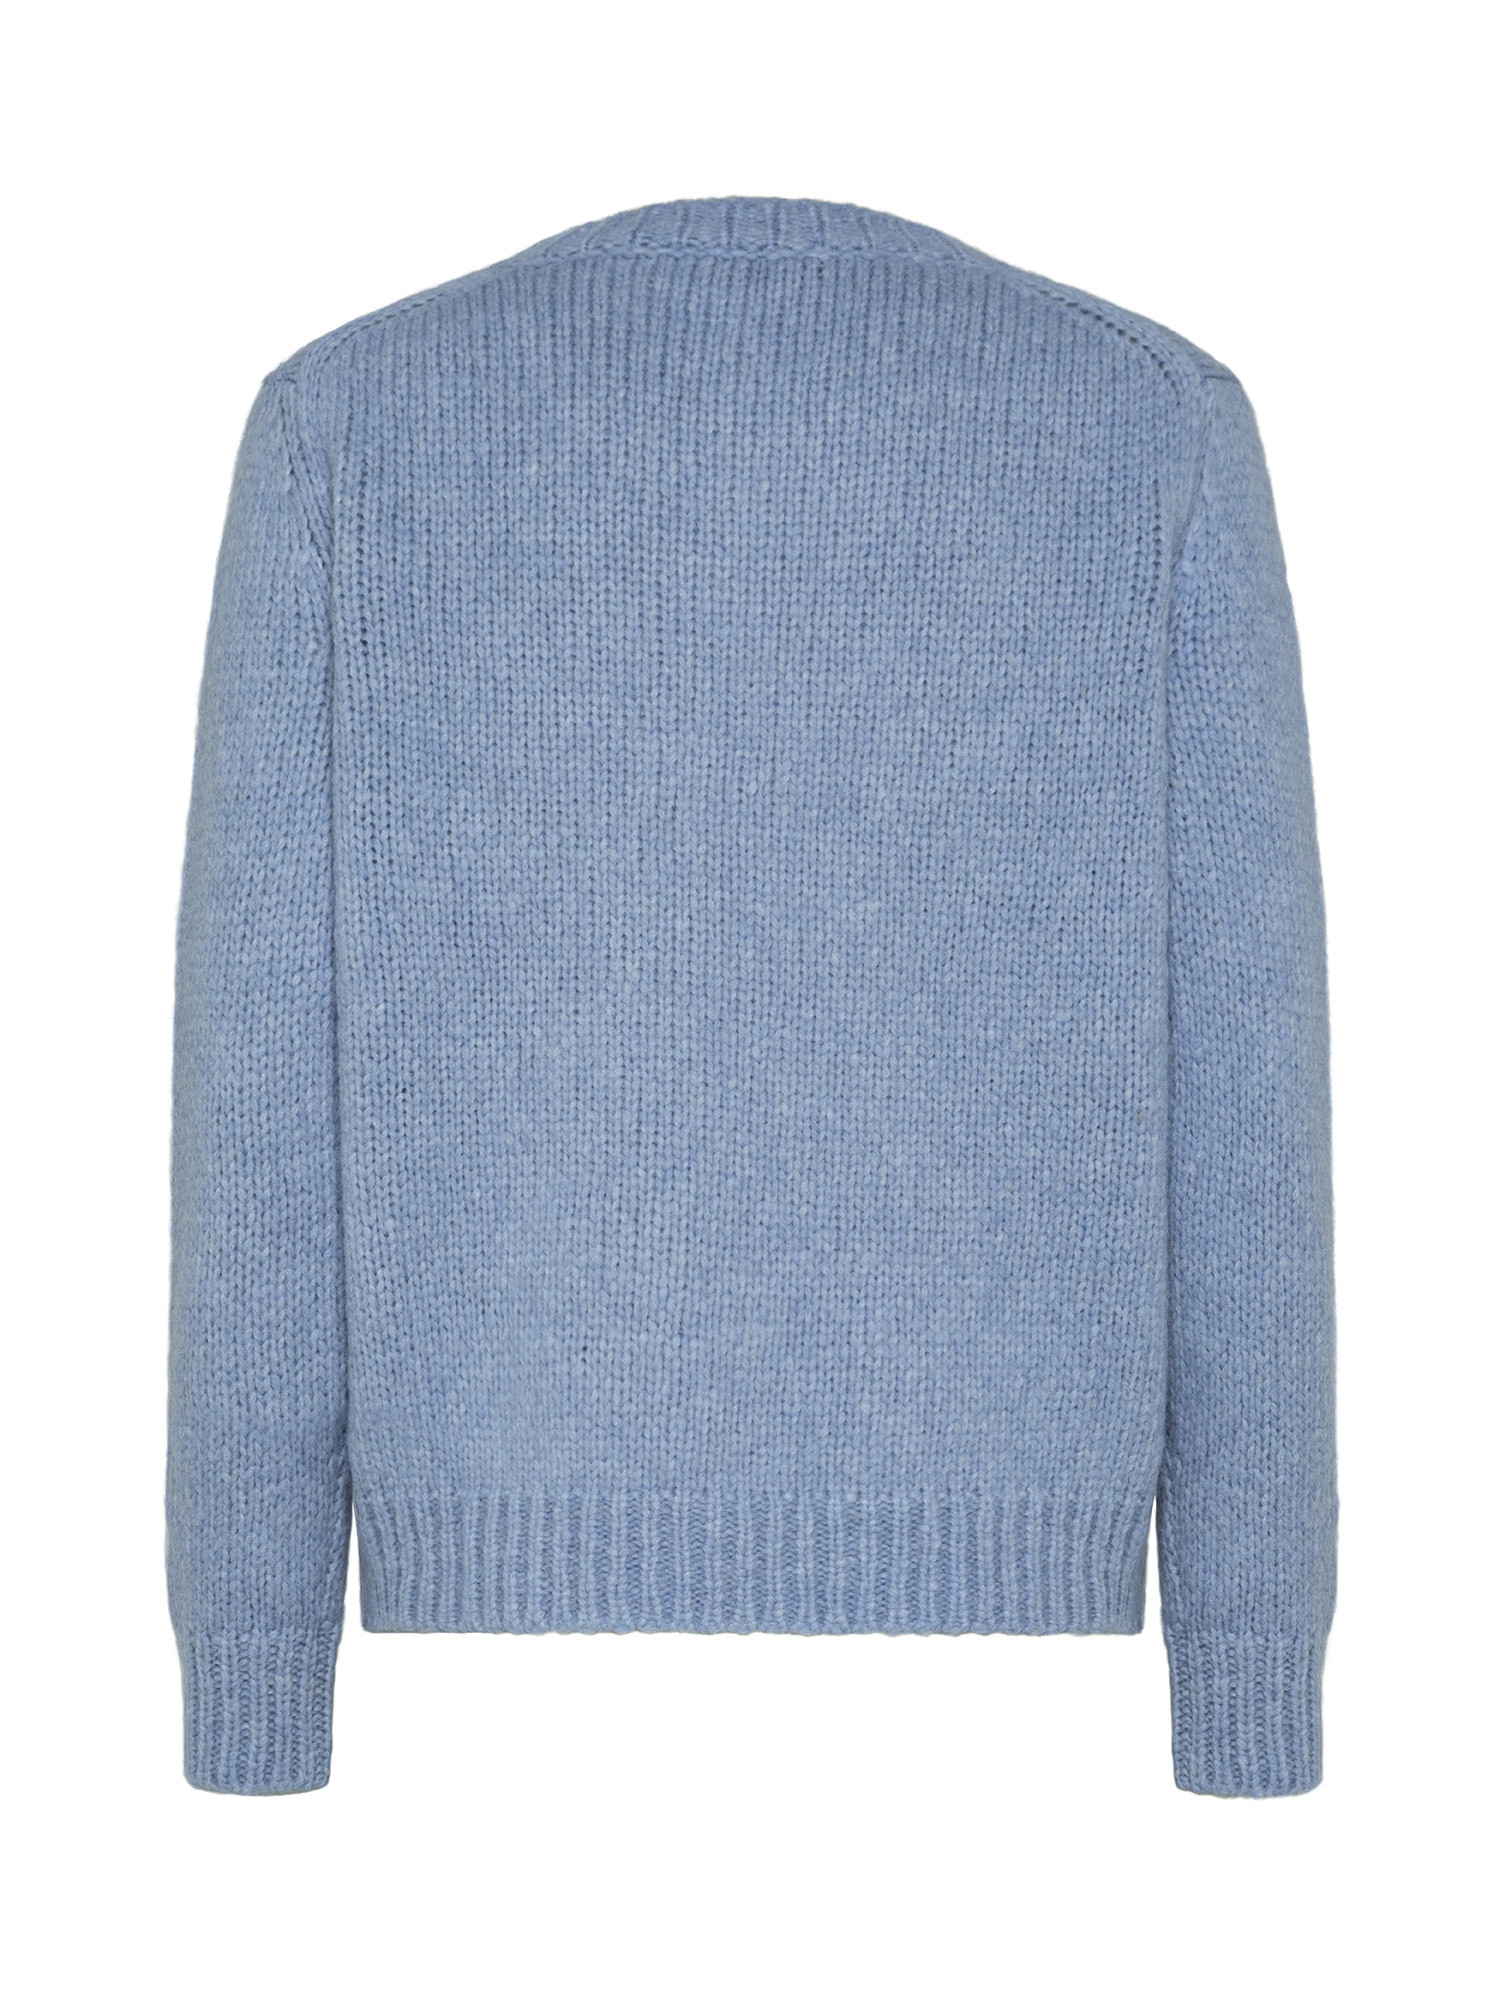 K Collection - Crewneck sweater, Light Blue, large image number 1